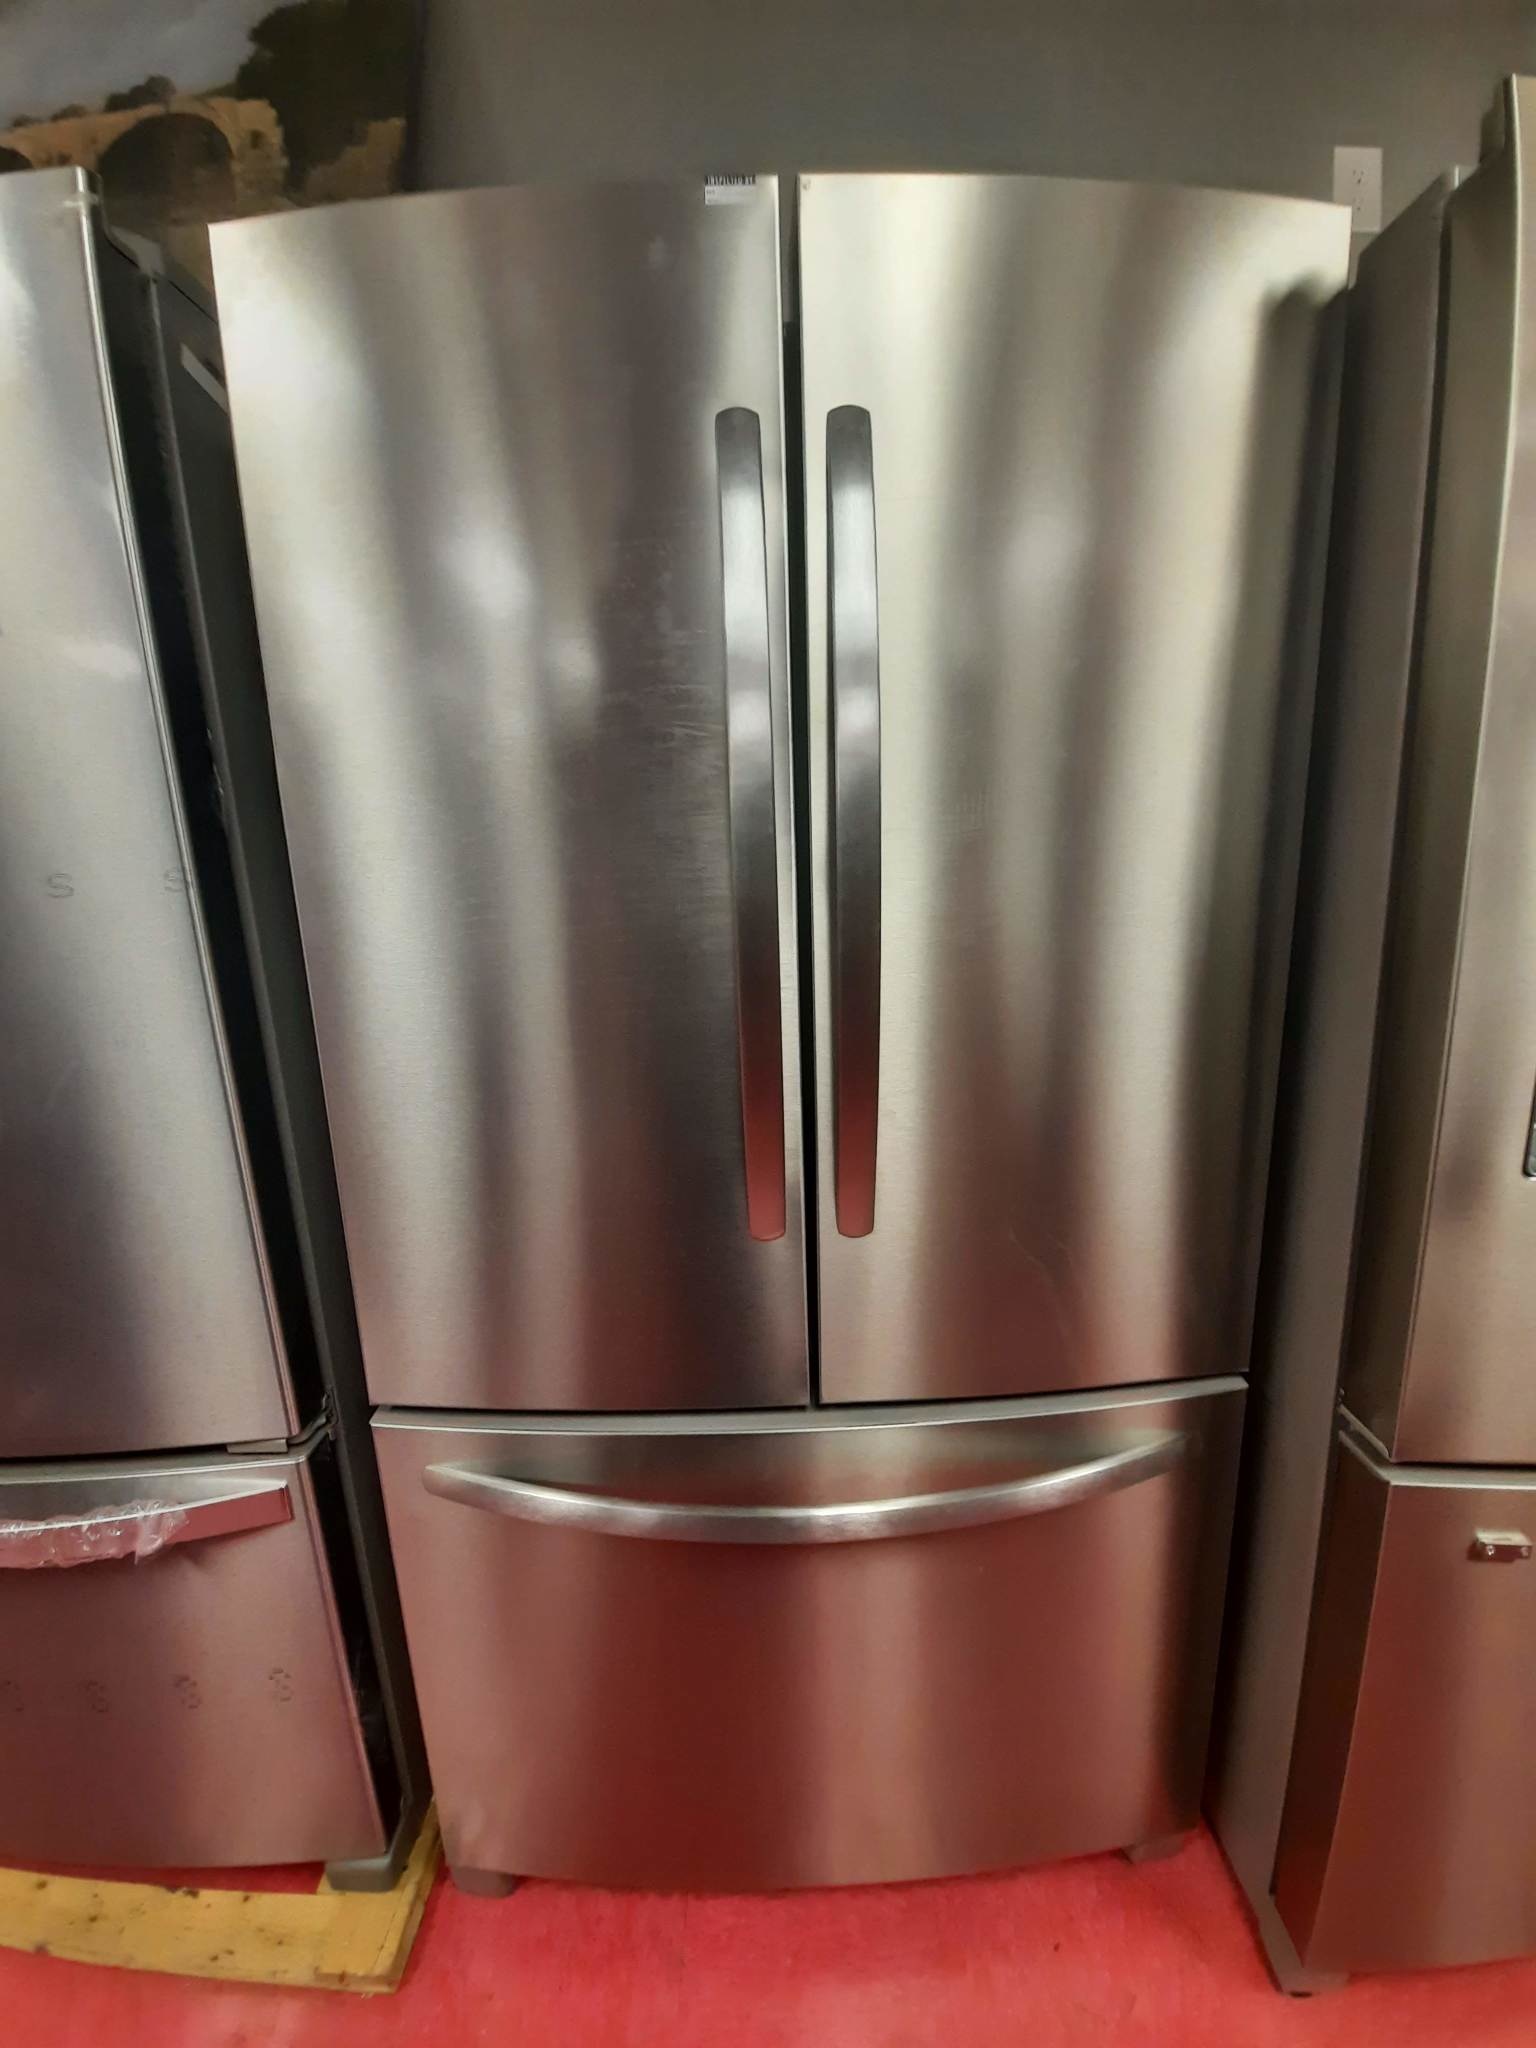 46+ Counter depth refrigerator refurbished ideas in 2021 